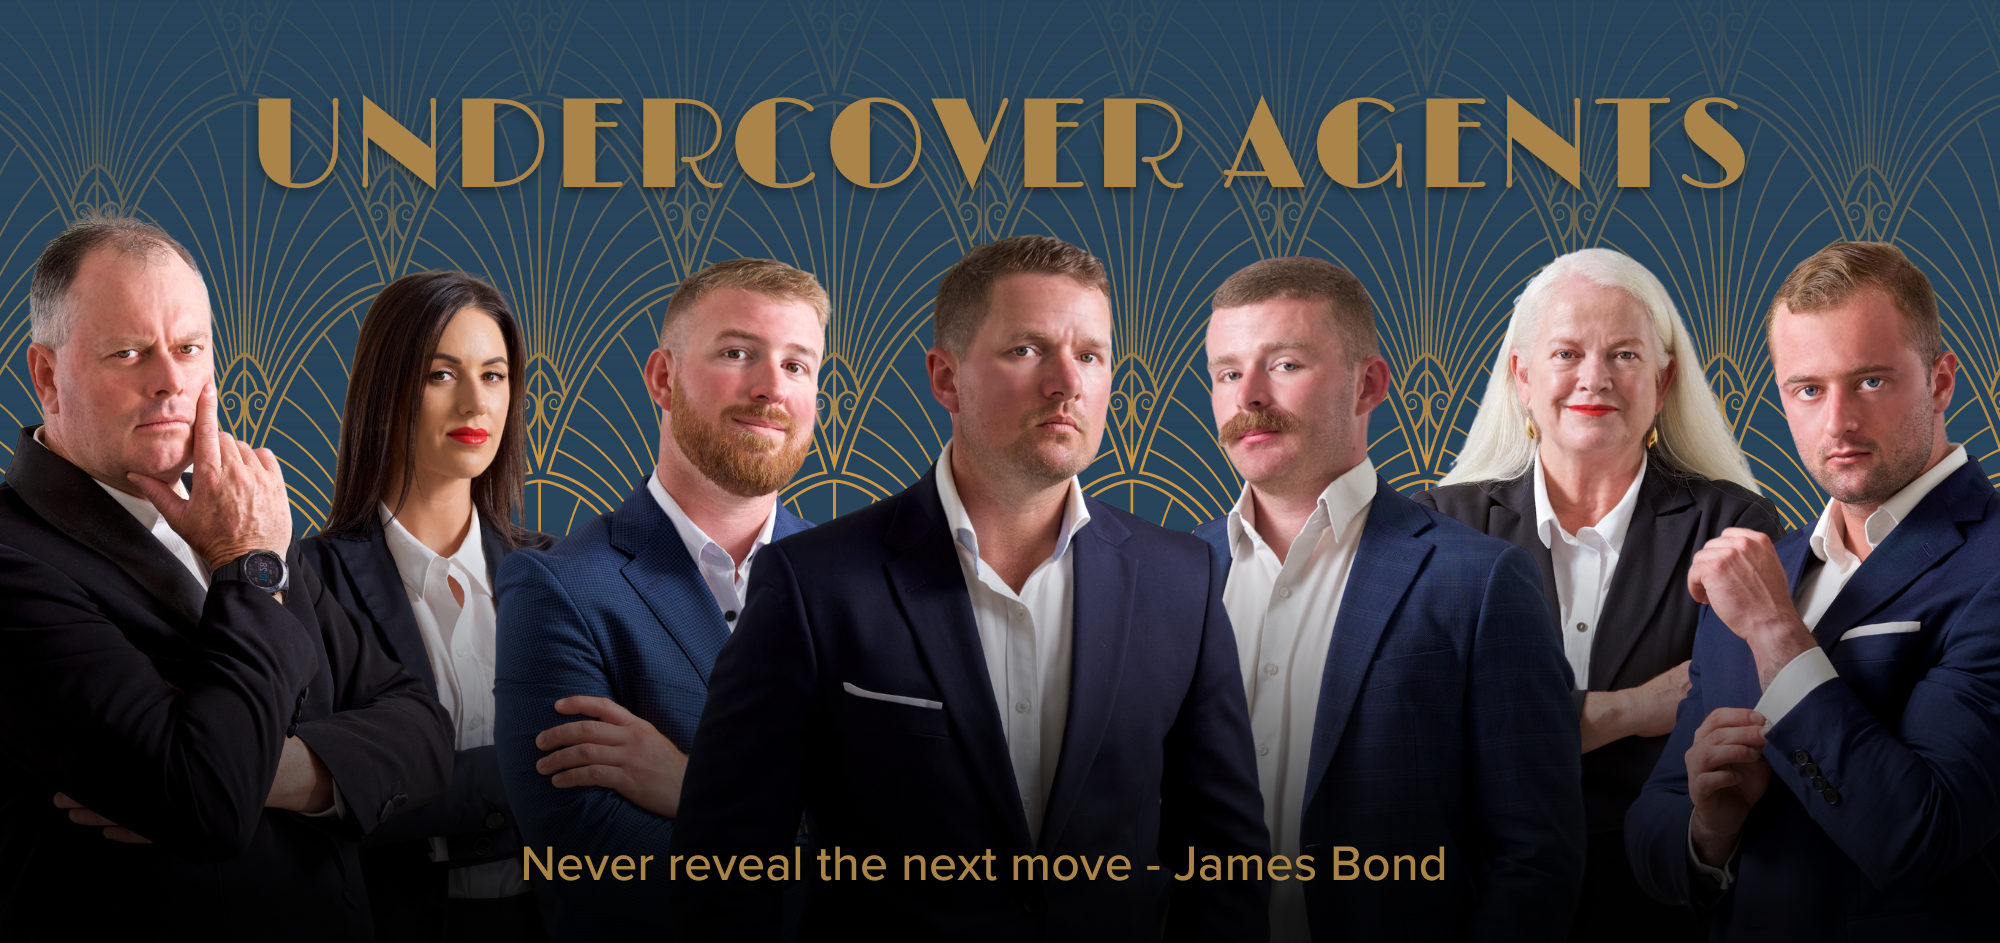 The Professionals Armidale Sales Team in James Bond-esque style